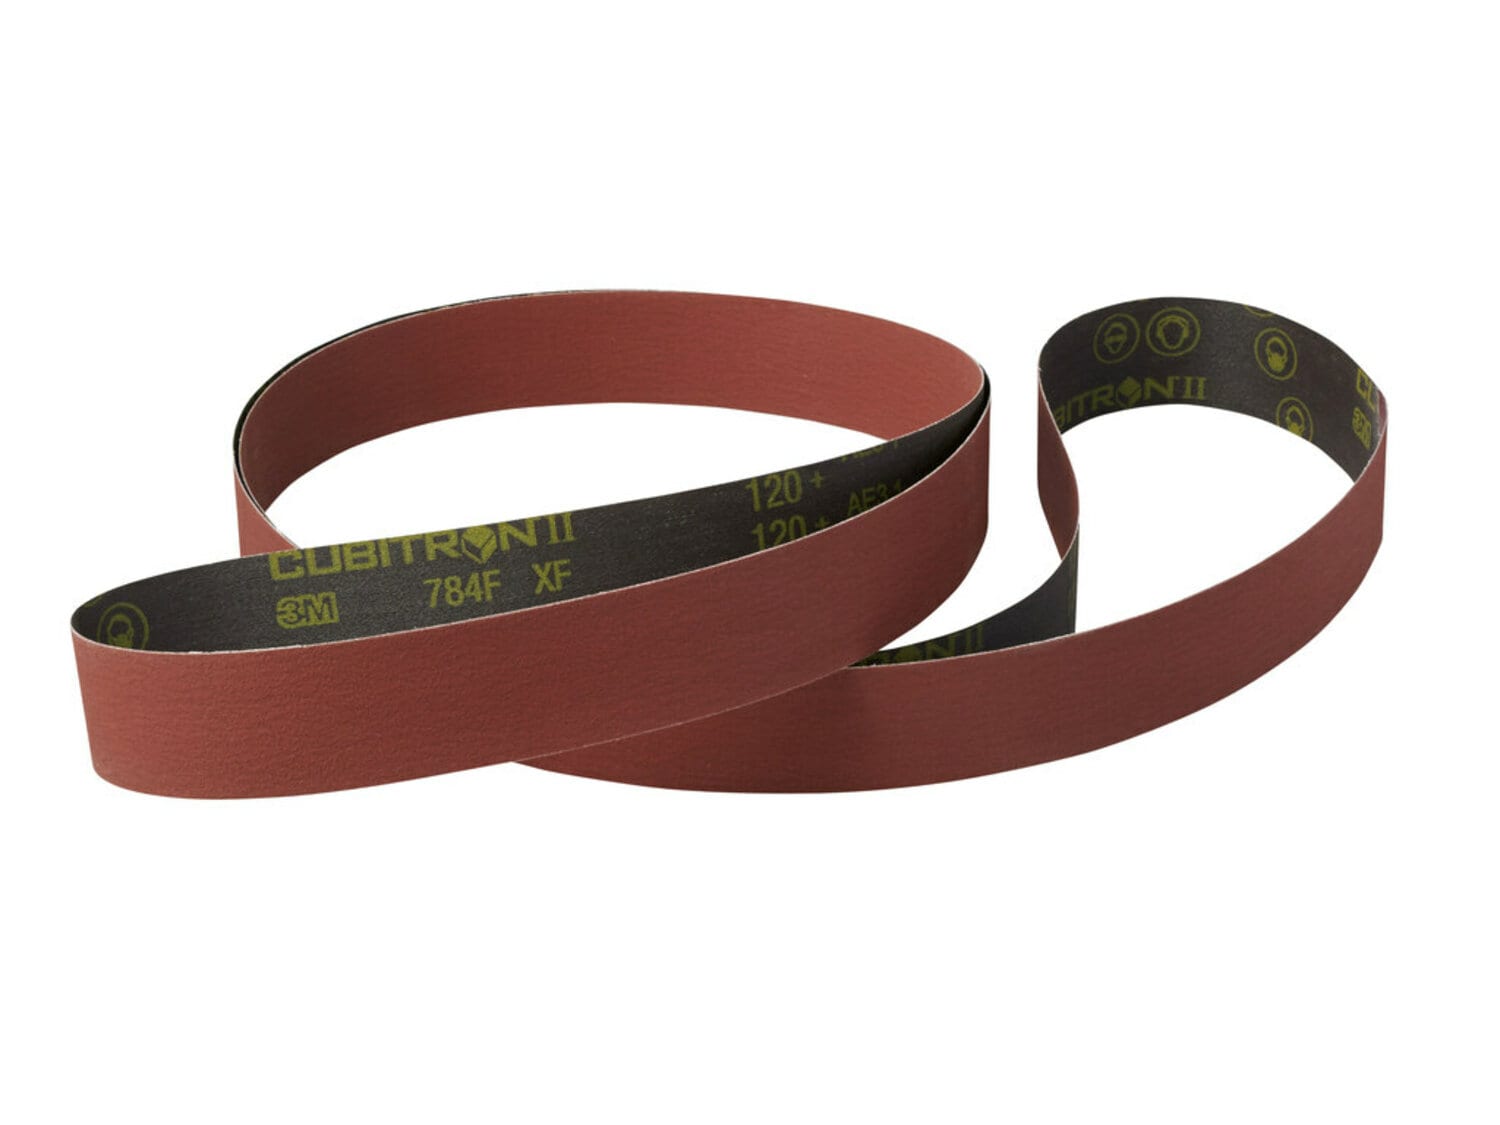 7010515065 - 3M Cubitron II Cloth Belt 984F, 60+ YF-weight, 2-1/2 in x 118 in,
Film-lok, Single-flex